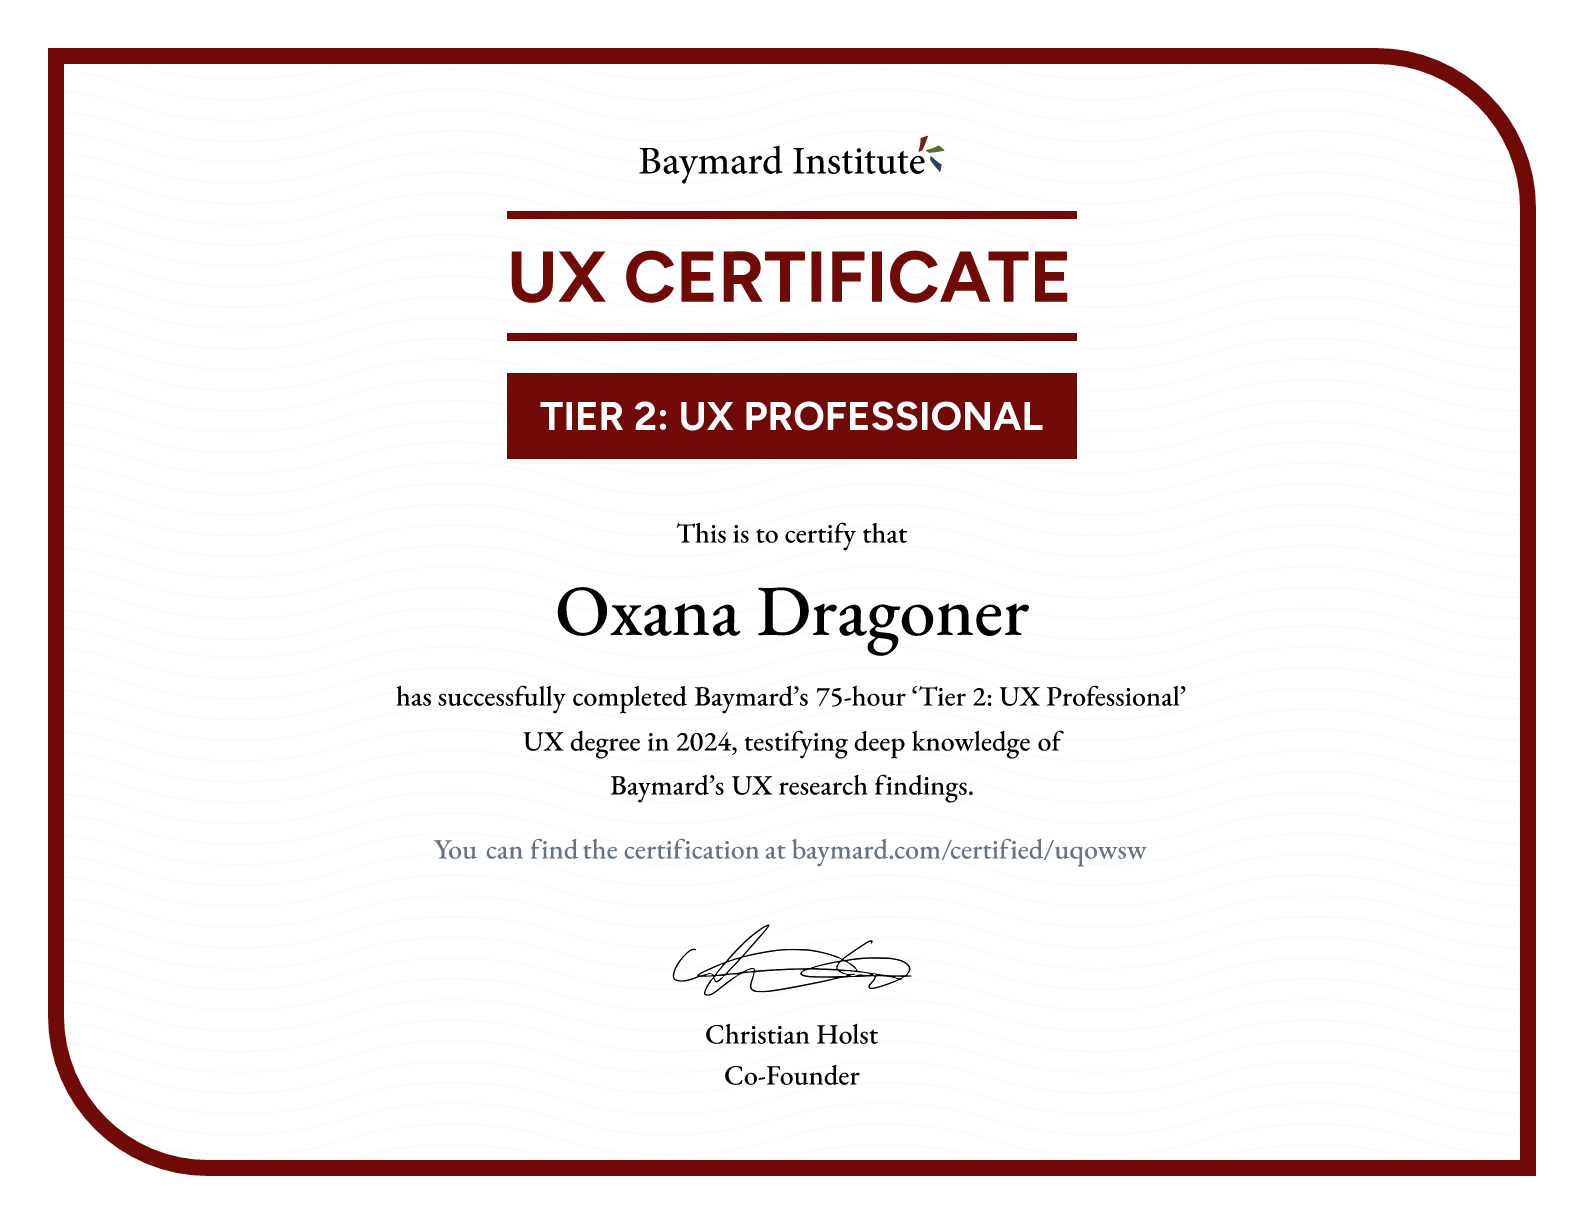 Oxana Dragoner’s certificate